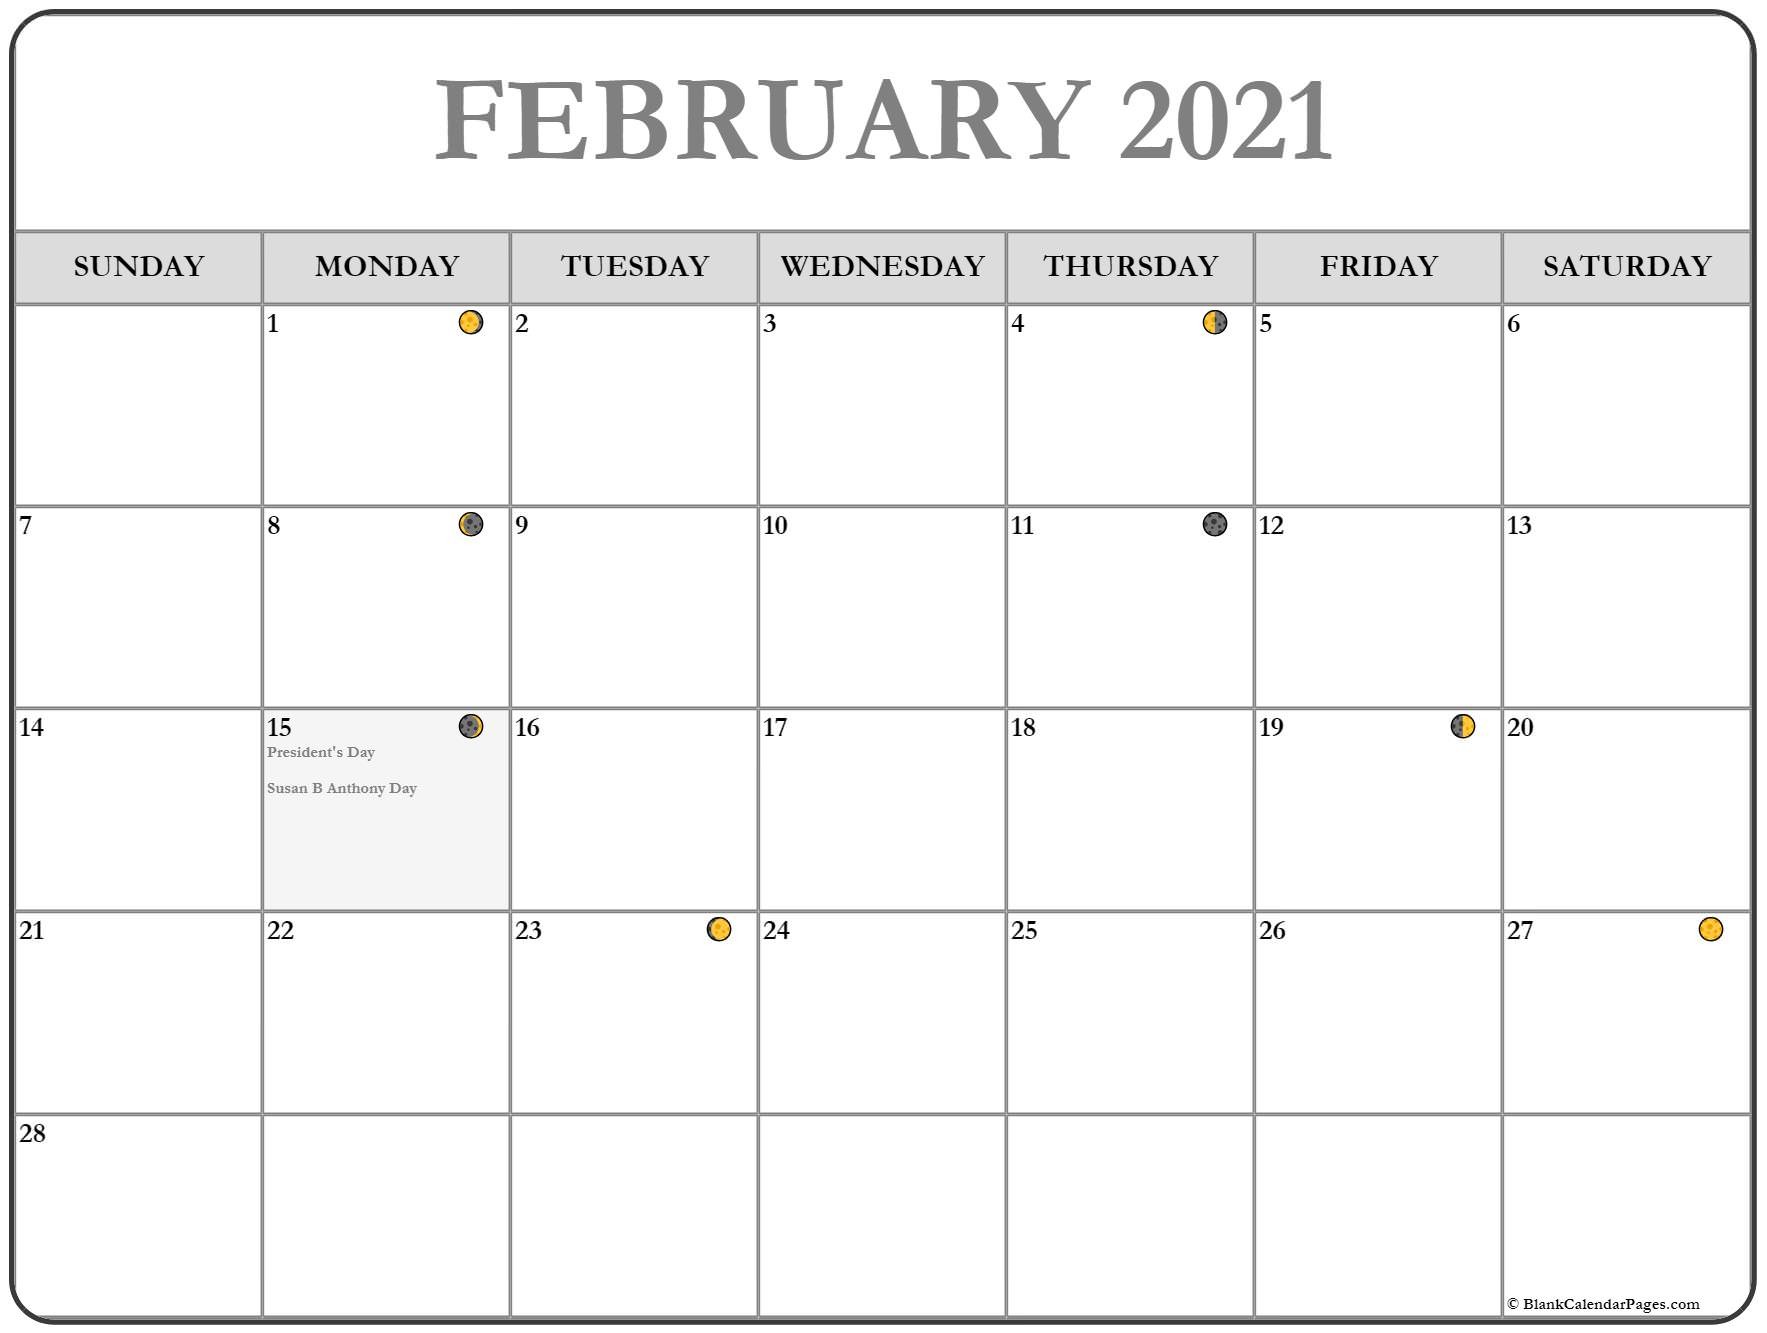 CAL=February 2021 calendar